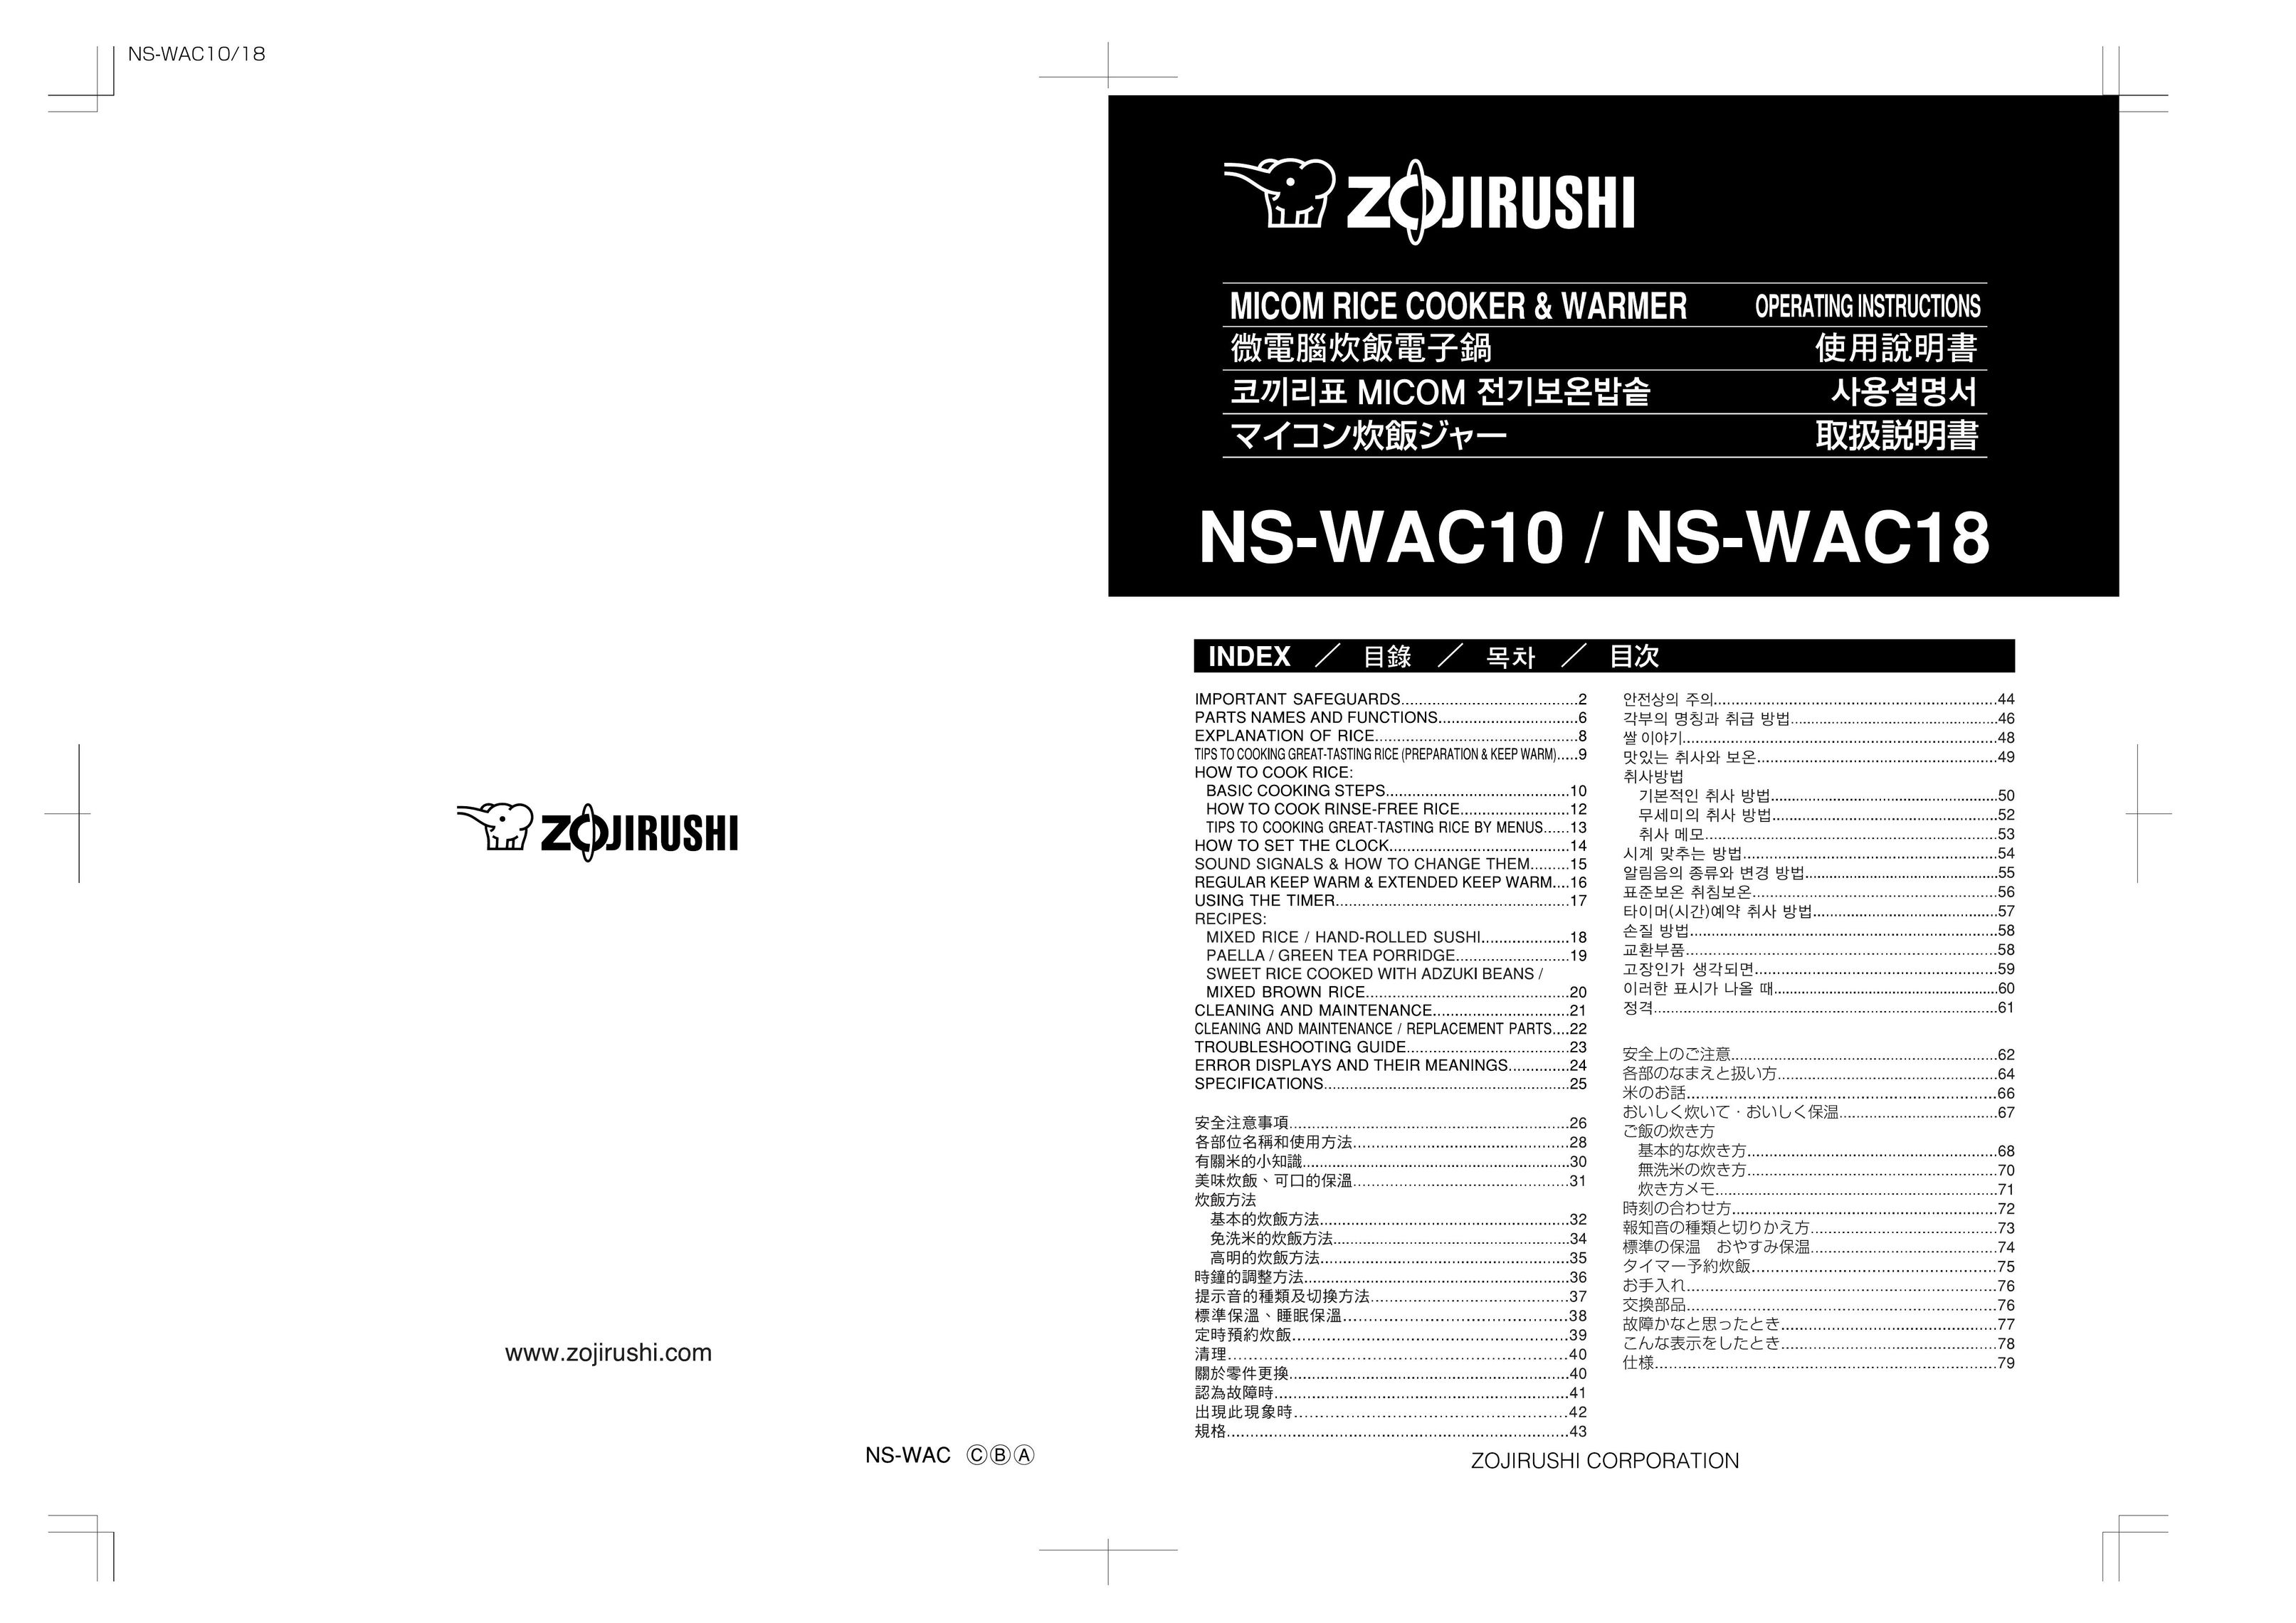 Zojirushi NS-WAC18 Baby Carrier User Manual